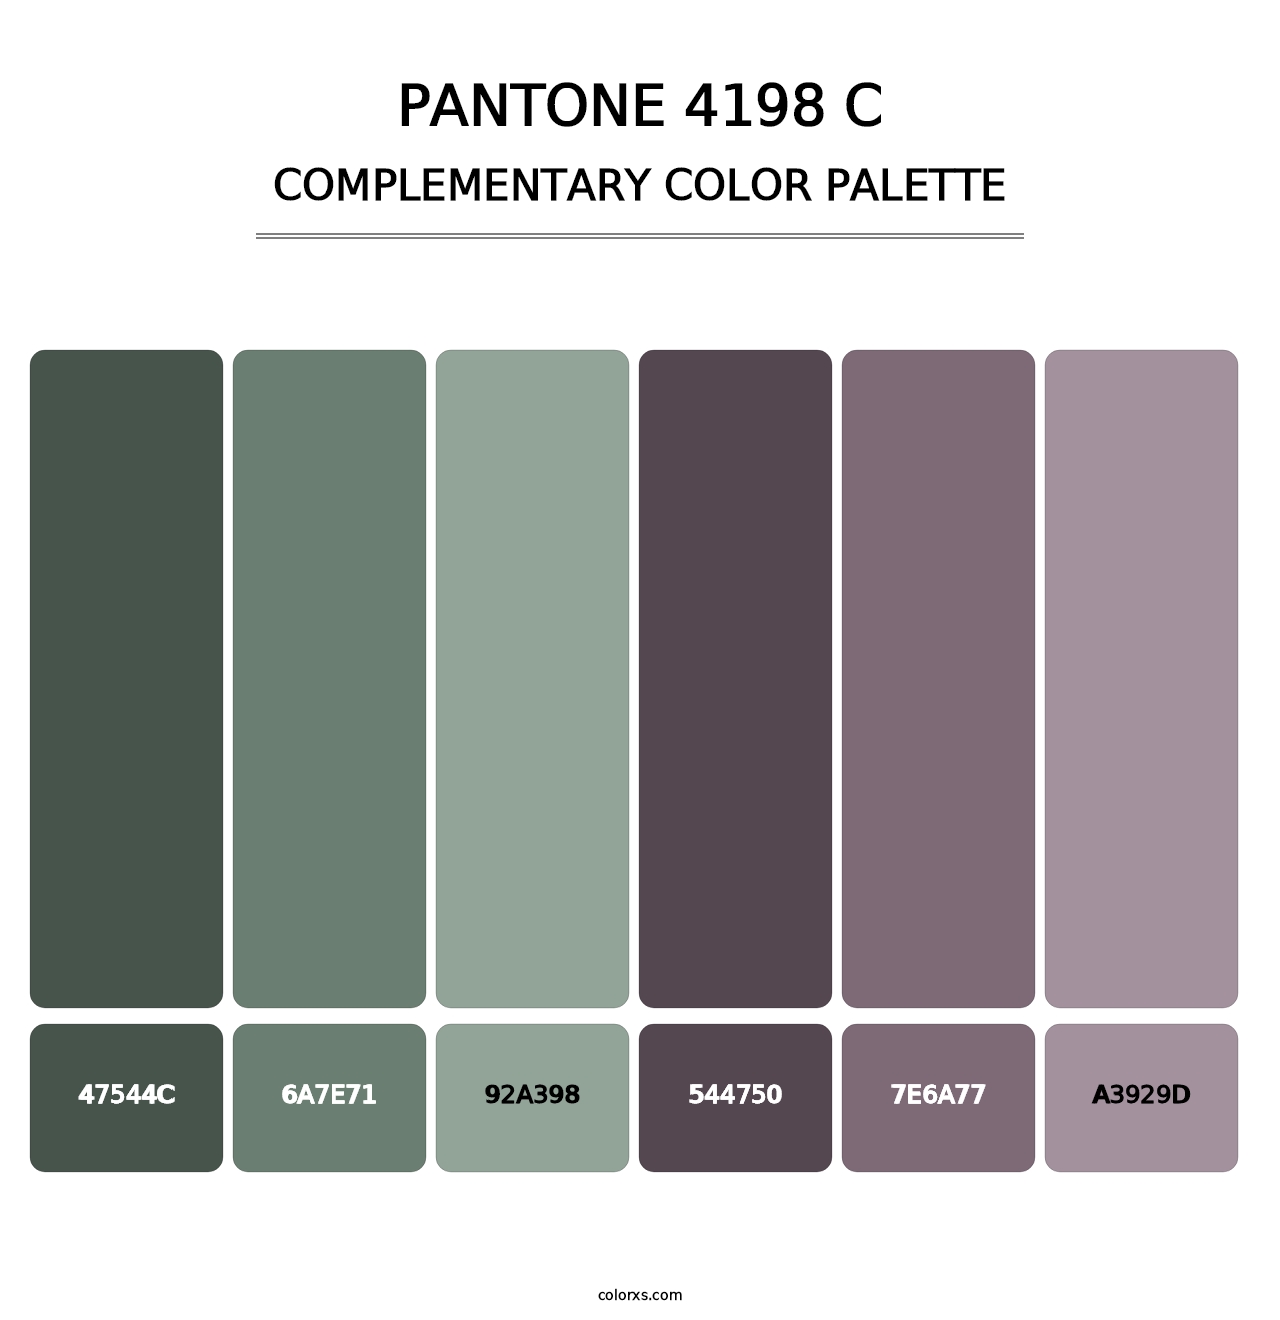 PANTONE 4198 C - Complementary Color Palette